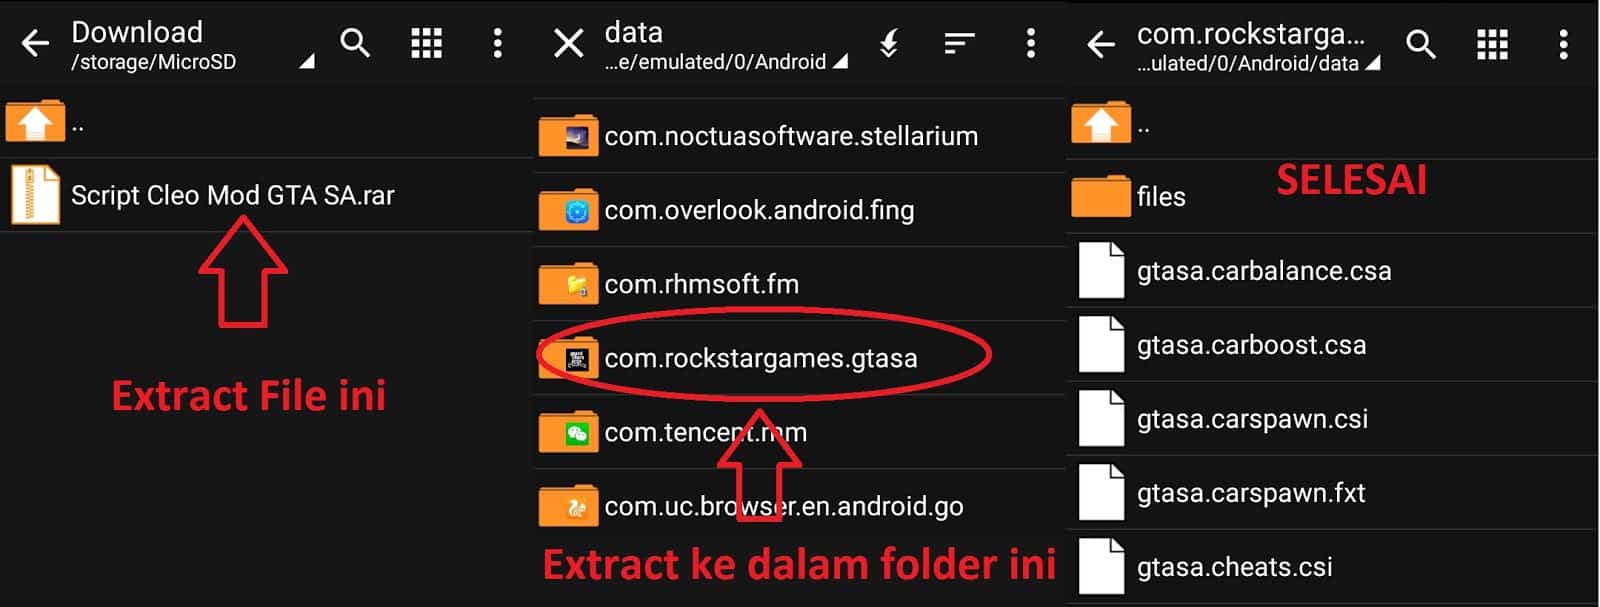 Copy-folder-to-com-rockstargames-gtasa-and-save-to-folder-Android-Data